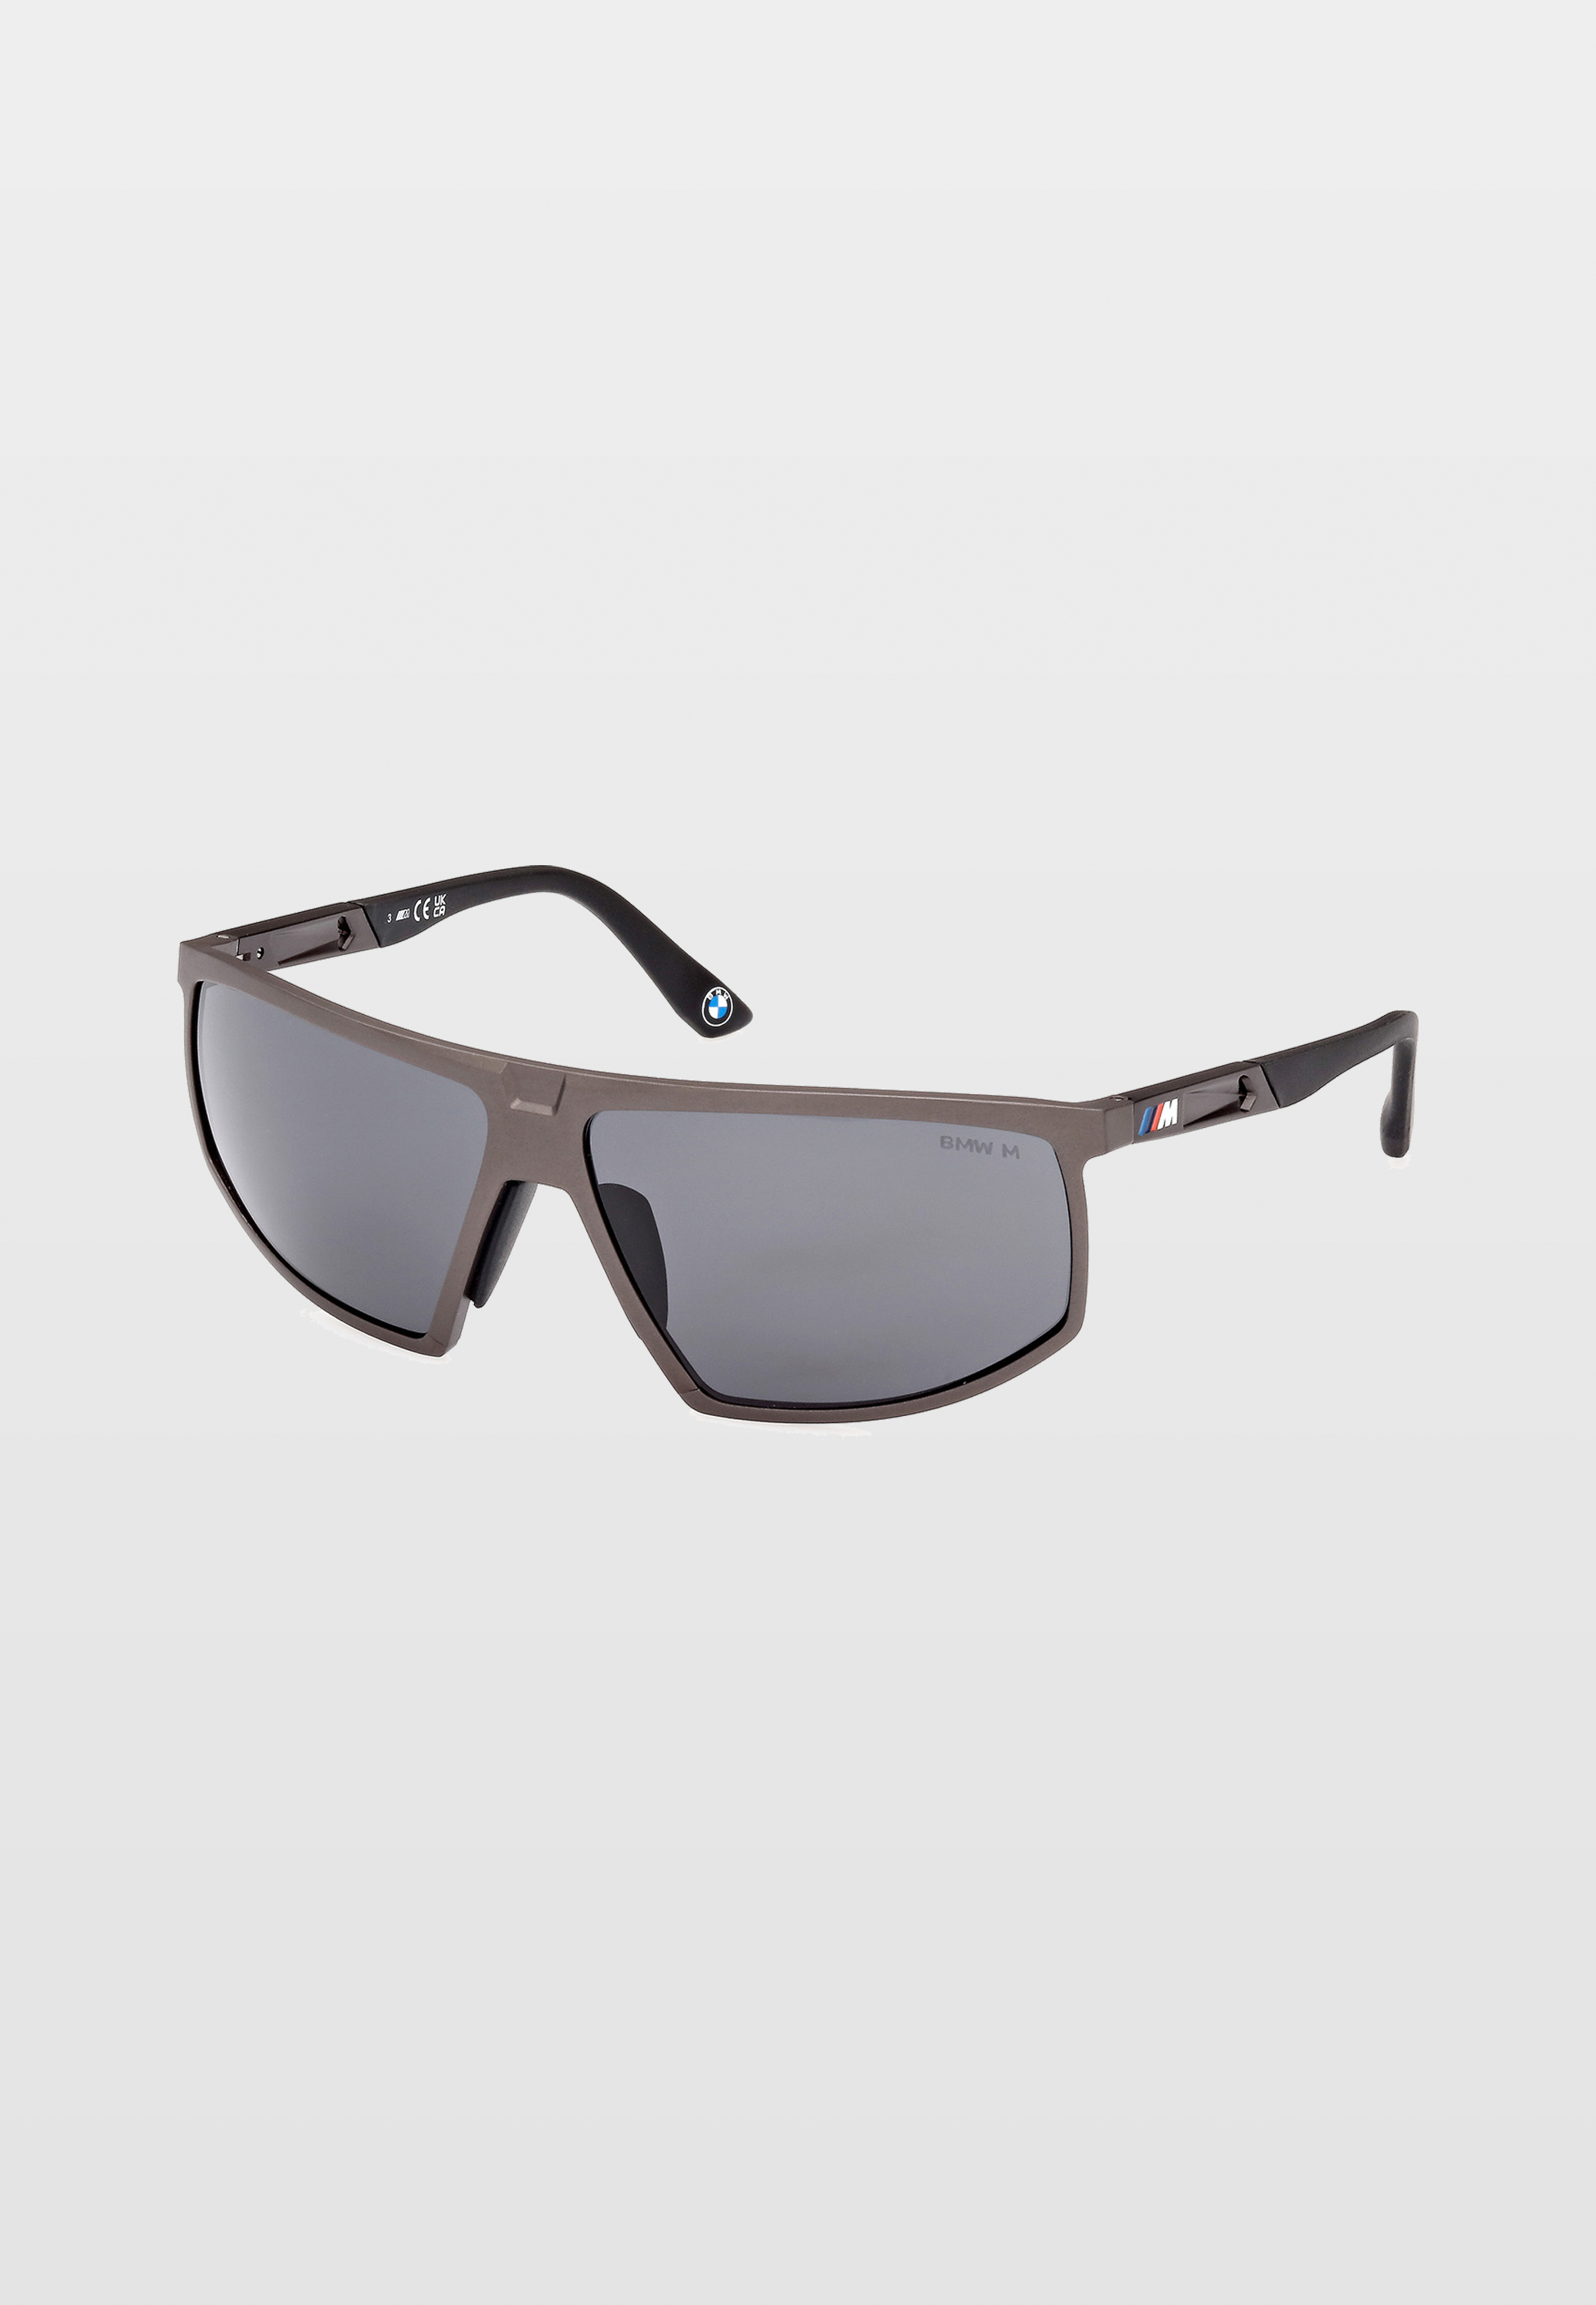 M sunglasses | BMW Lifestyle Store